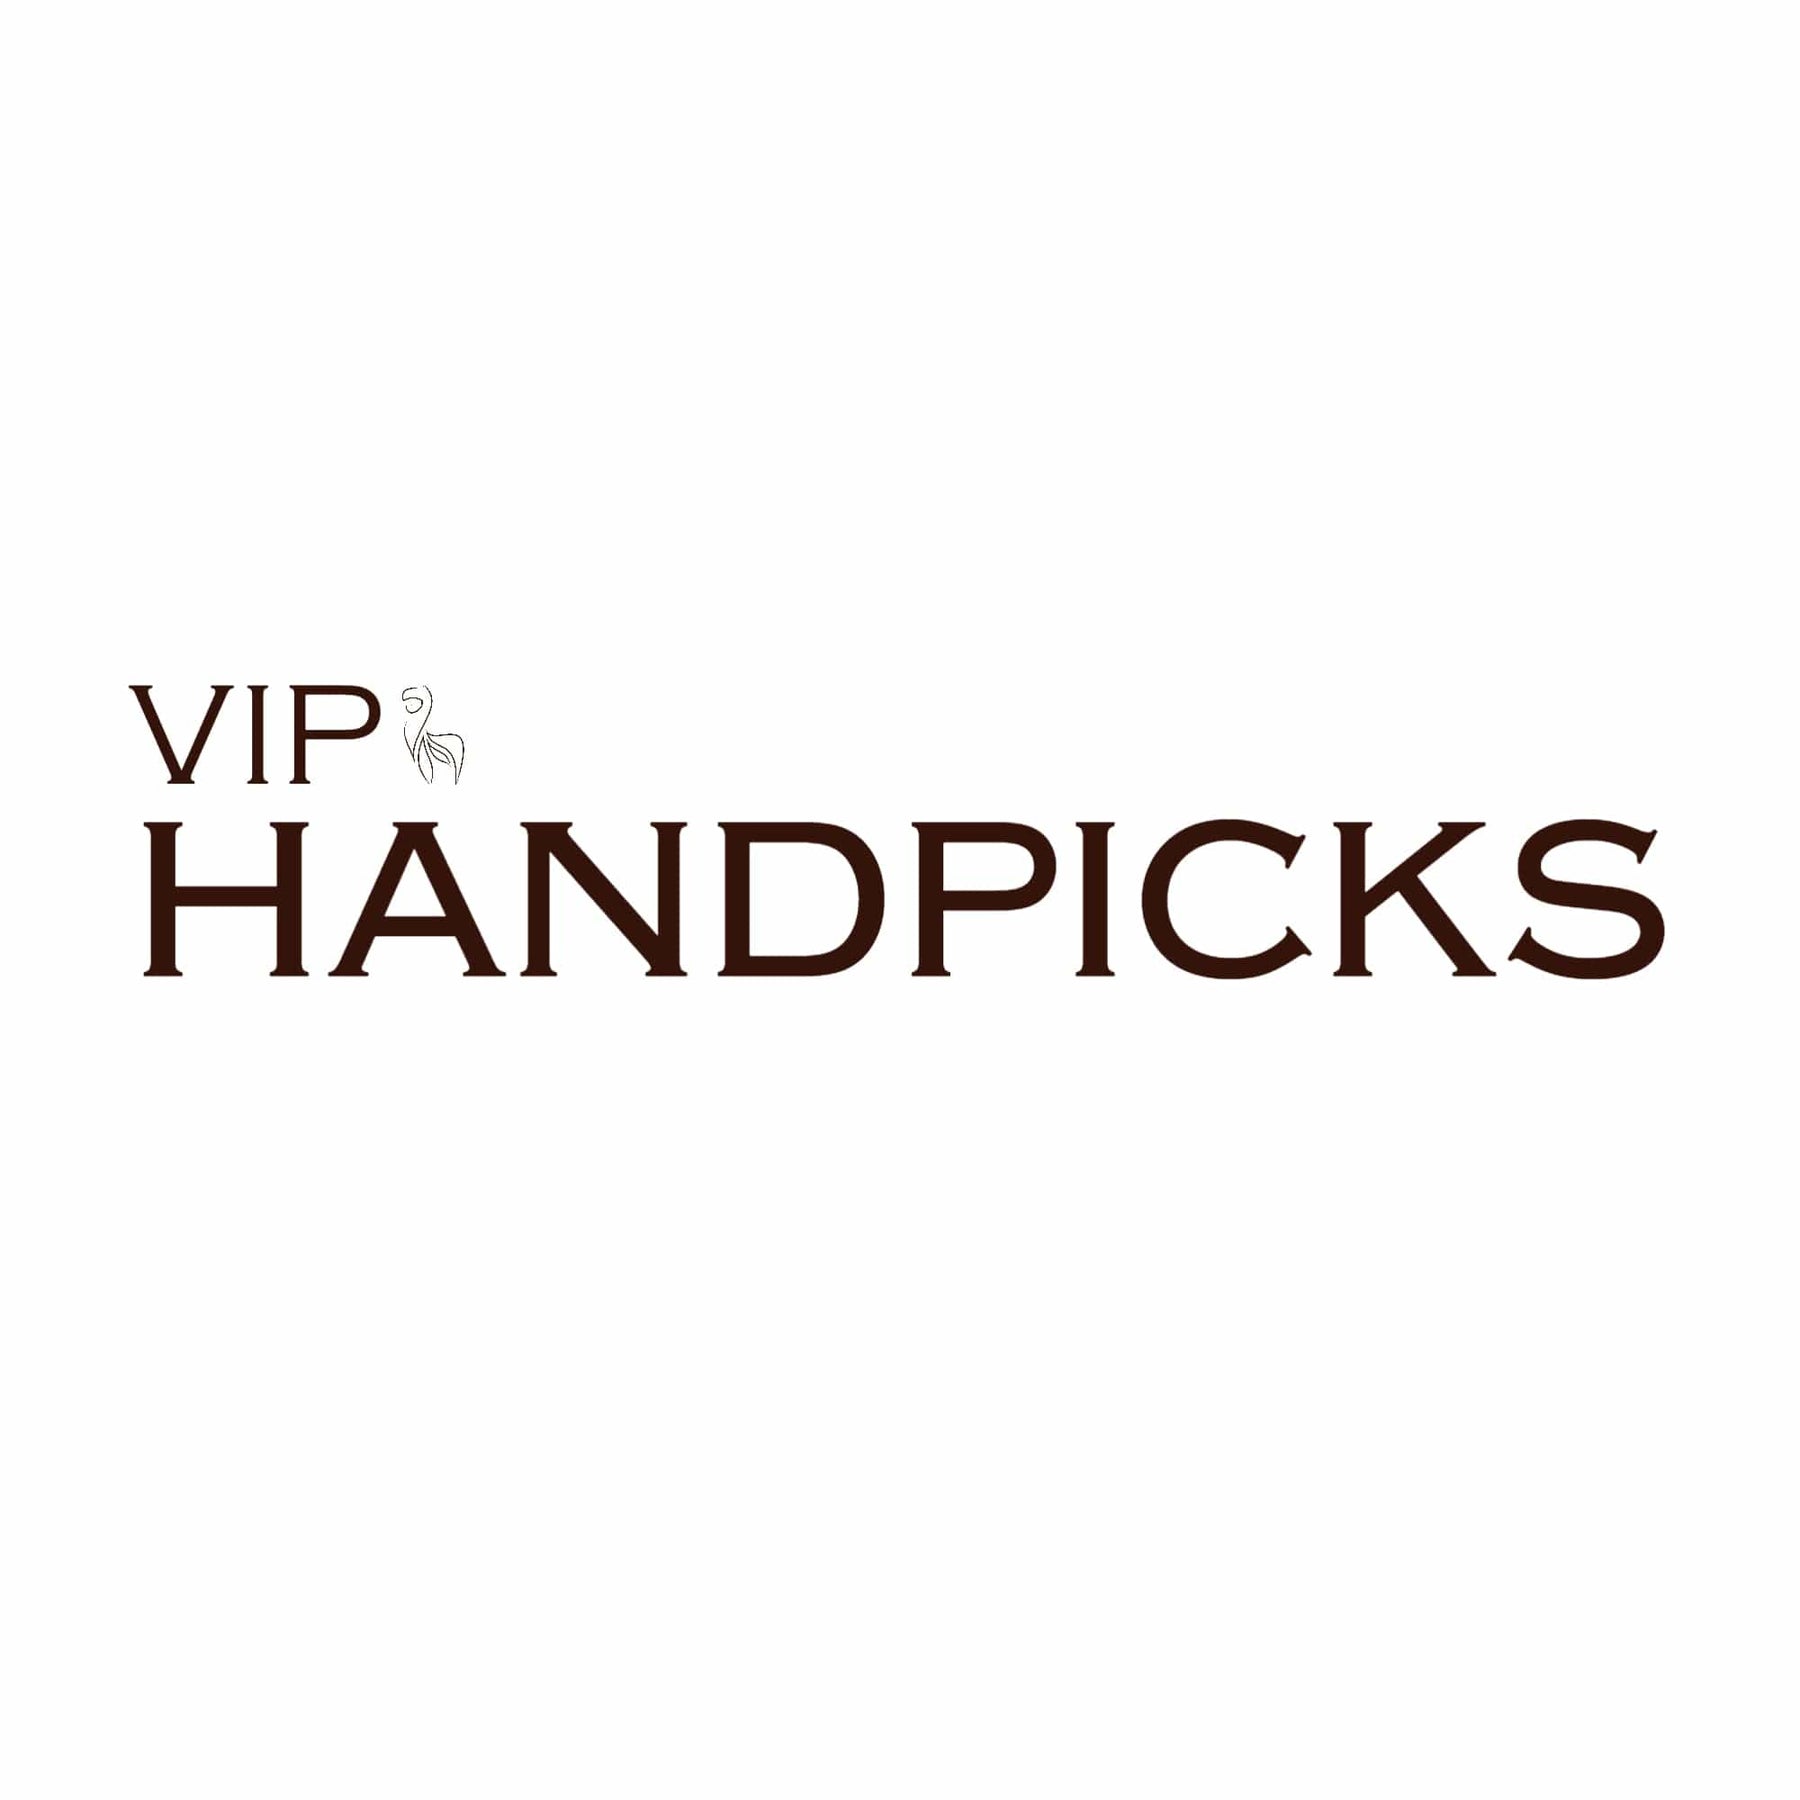 VIP - Handpicks